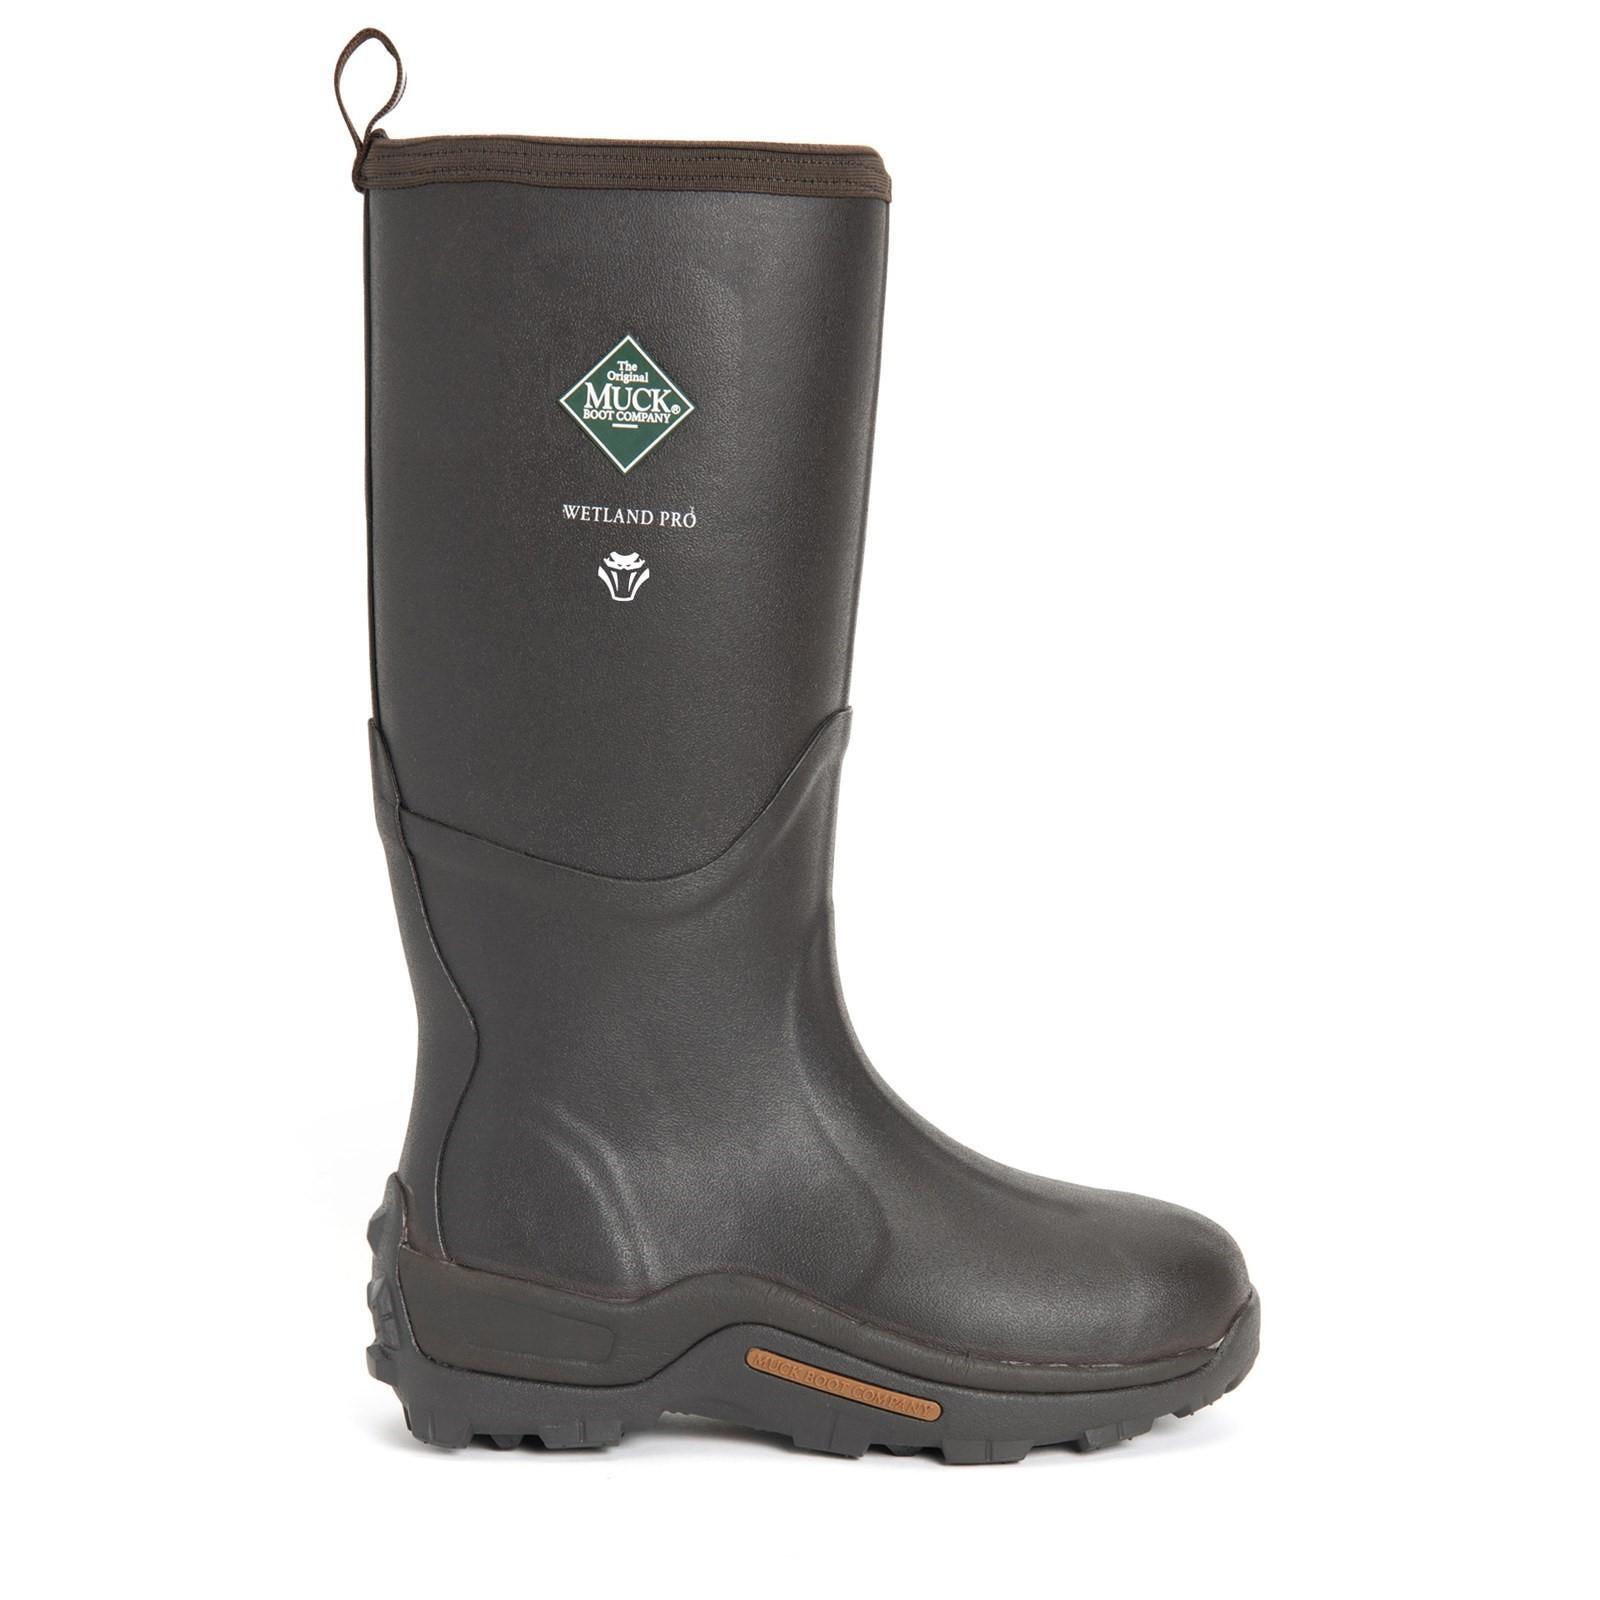 Mens Wetland Pro Wellington Boots (Brown) 3/4